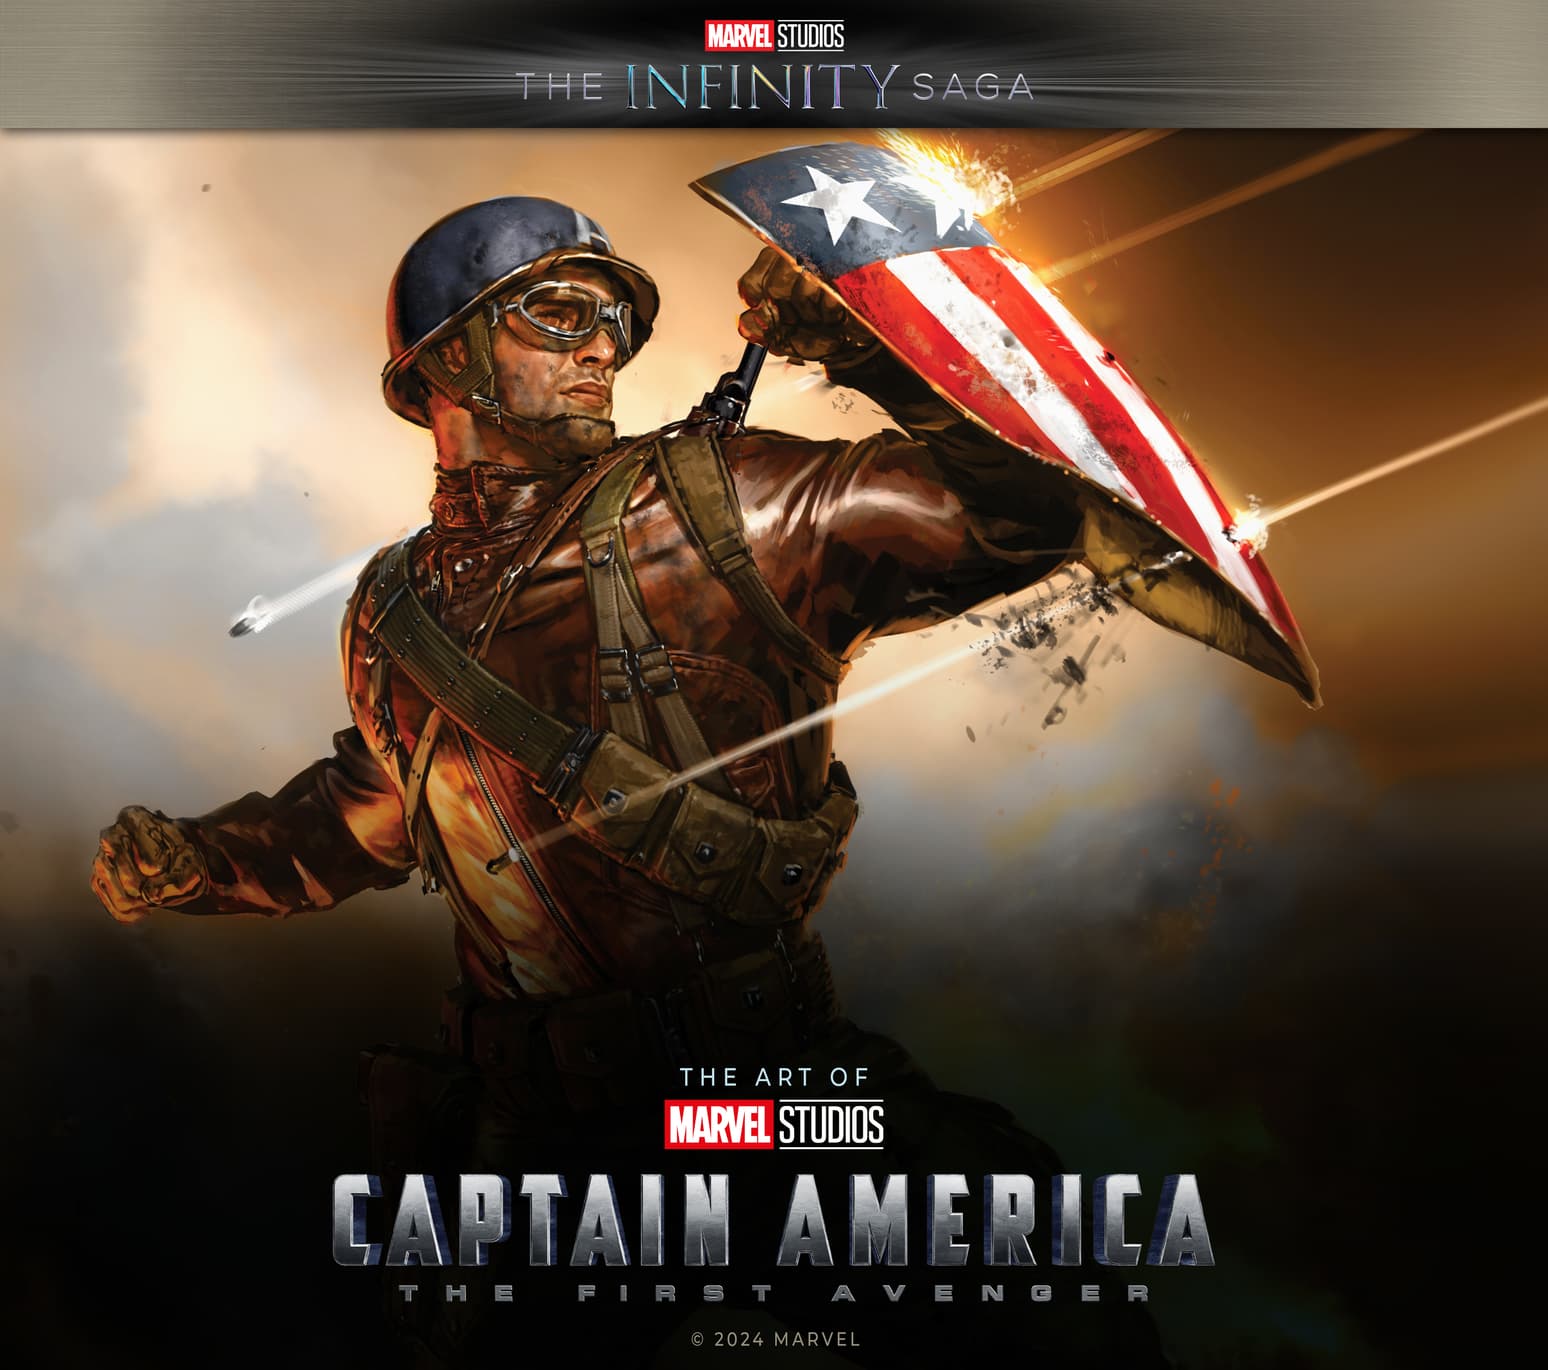 Marvel Studios' The Infinity Saga - Captain America: The First Avenger - The Art of the Movie